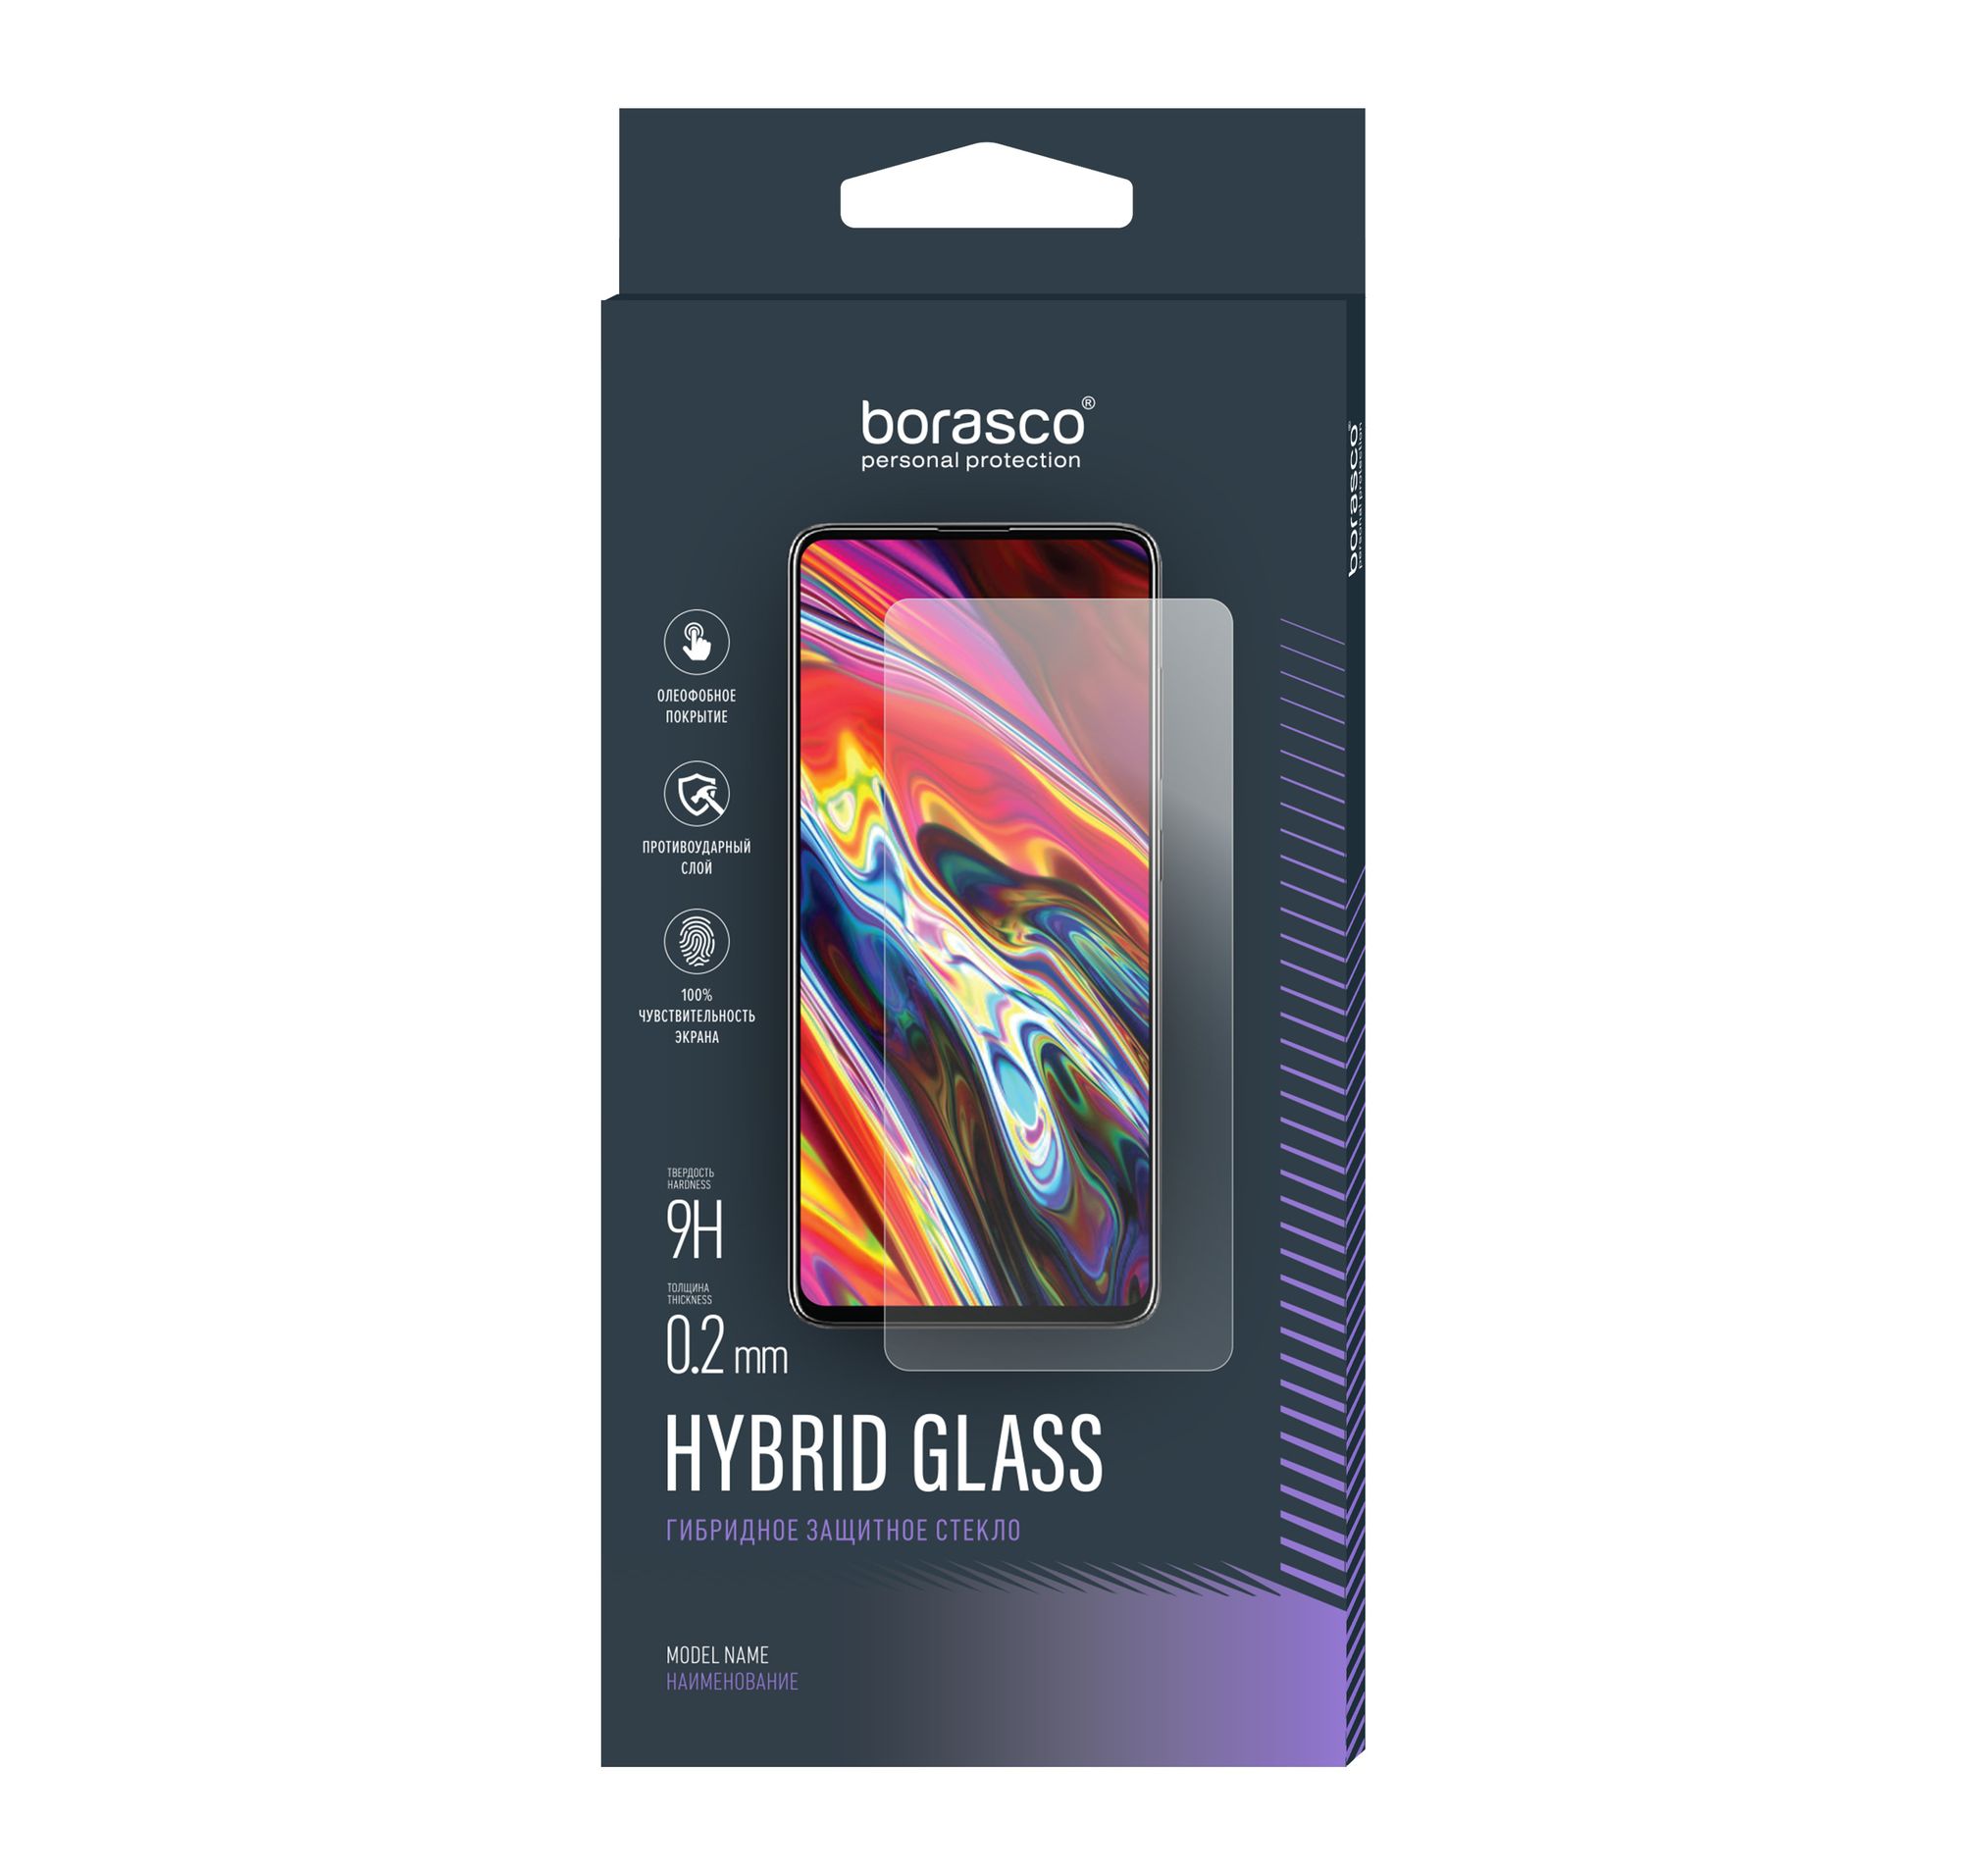 Стекло защитное Hybrid Glass VSP 0,26 мм для LG X Power защитное стекло hybrid glass для lg x power 2 m320